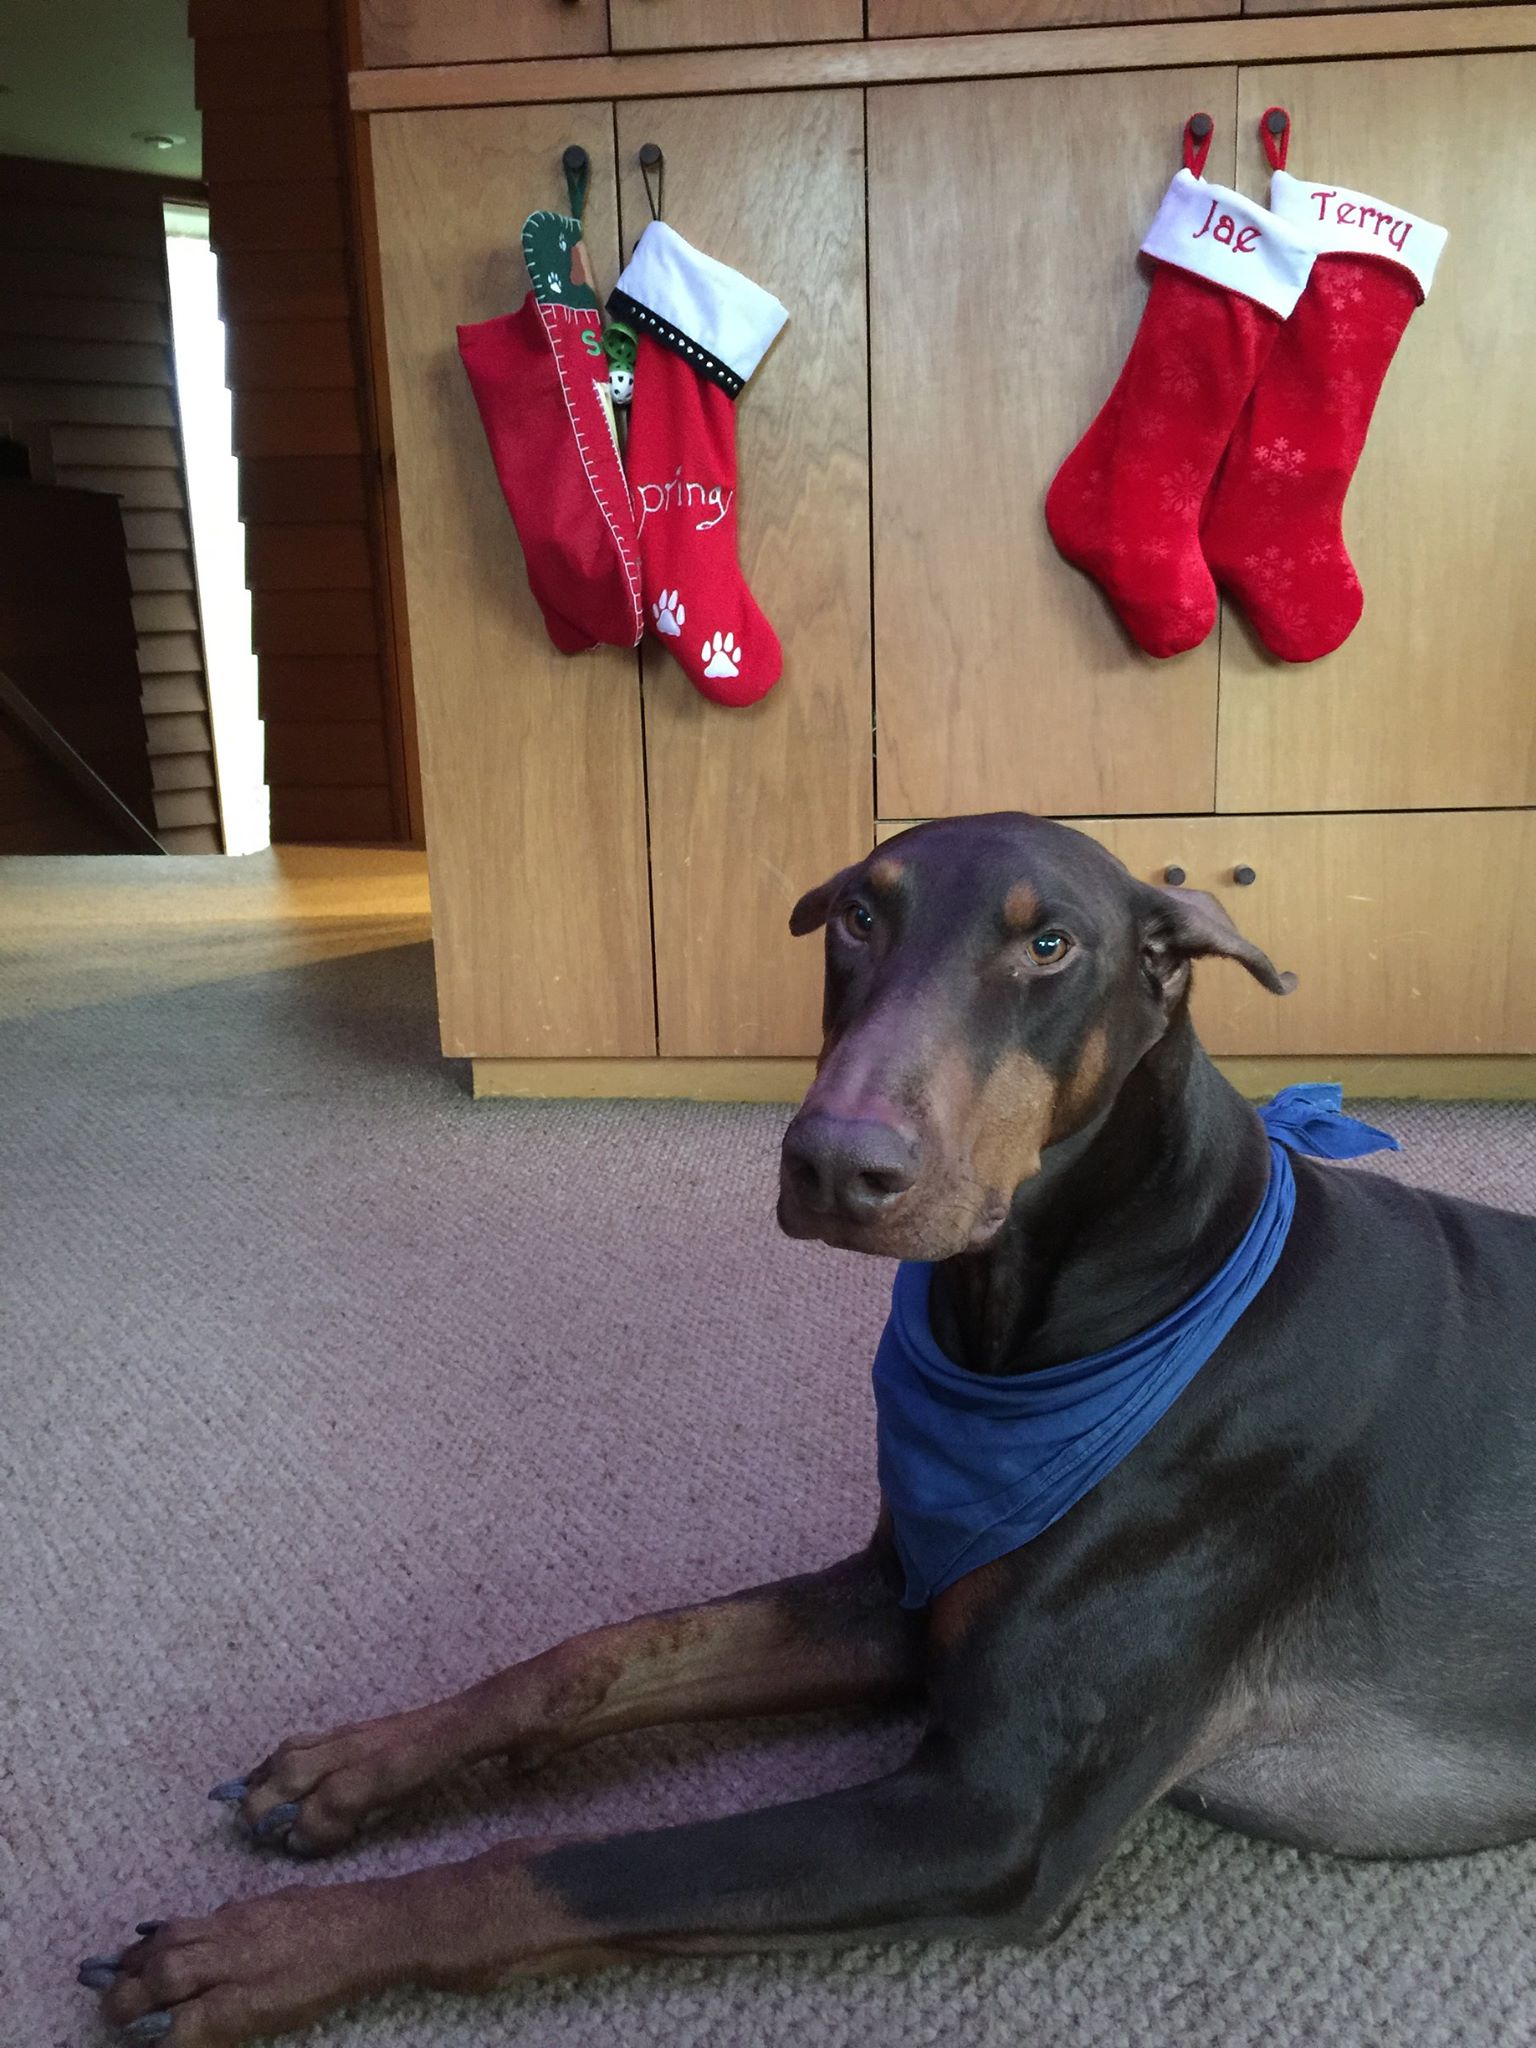 Strut wants his stocking…